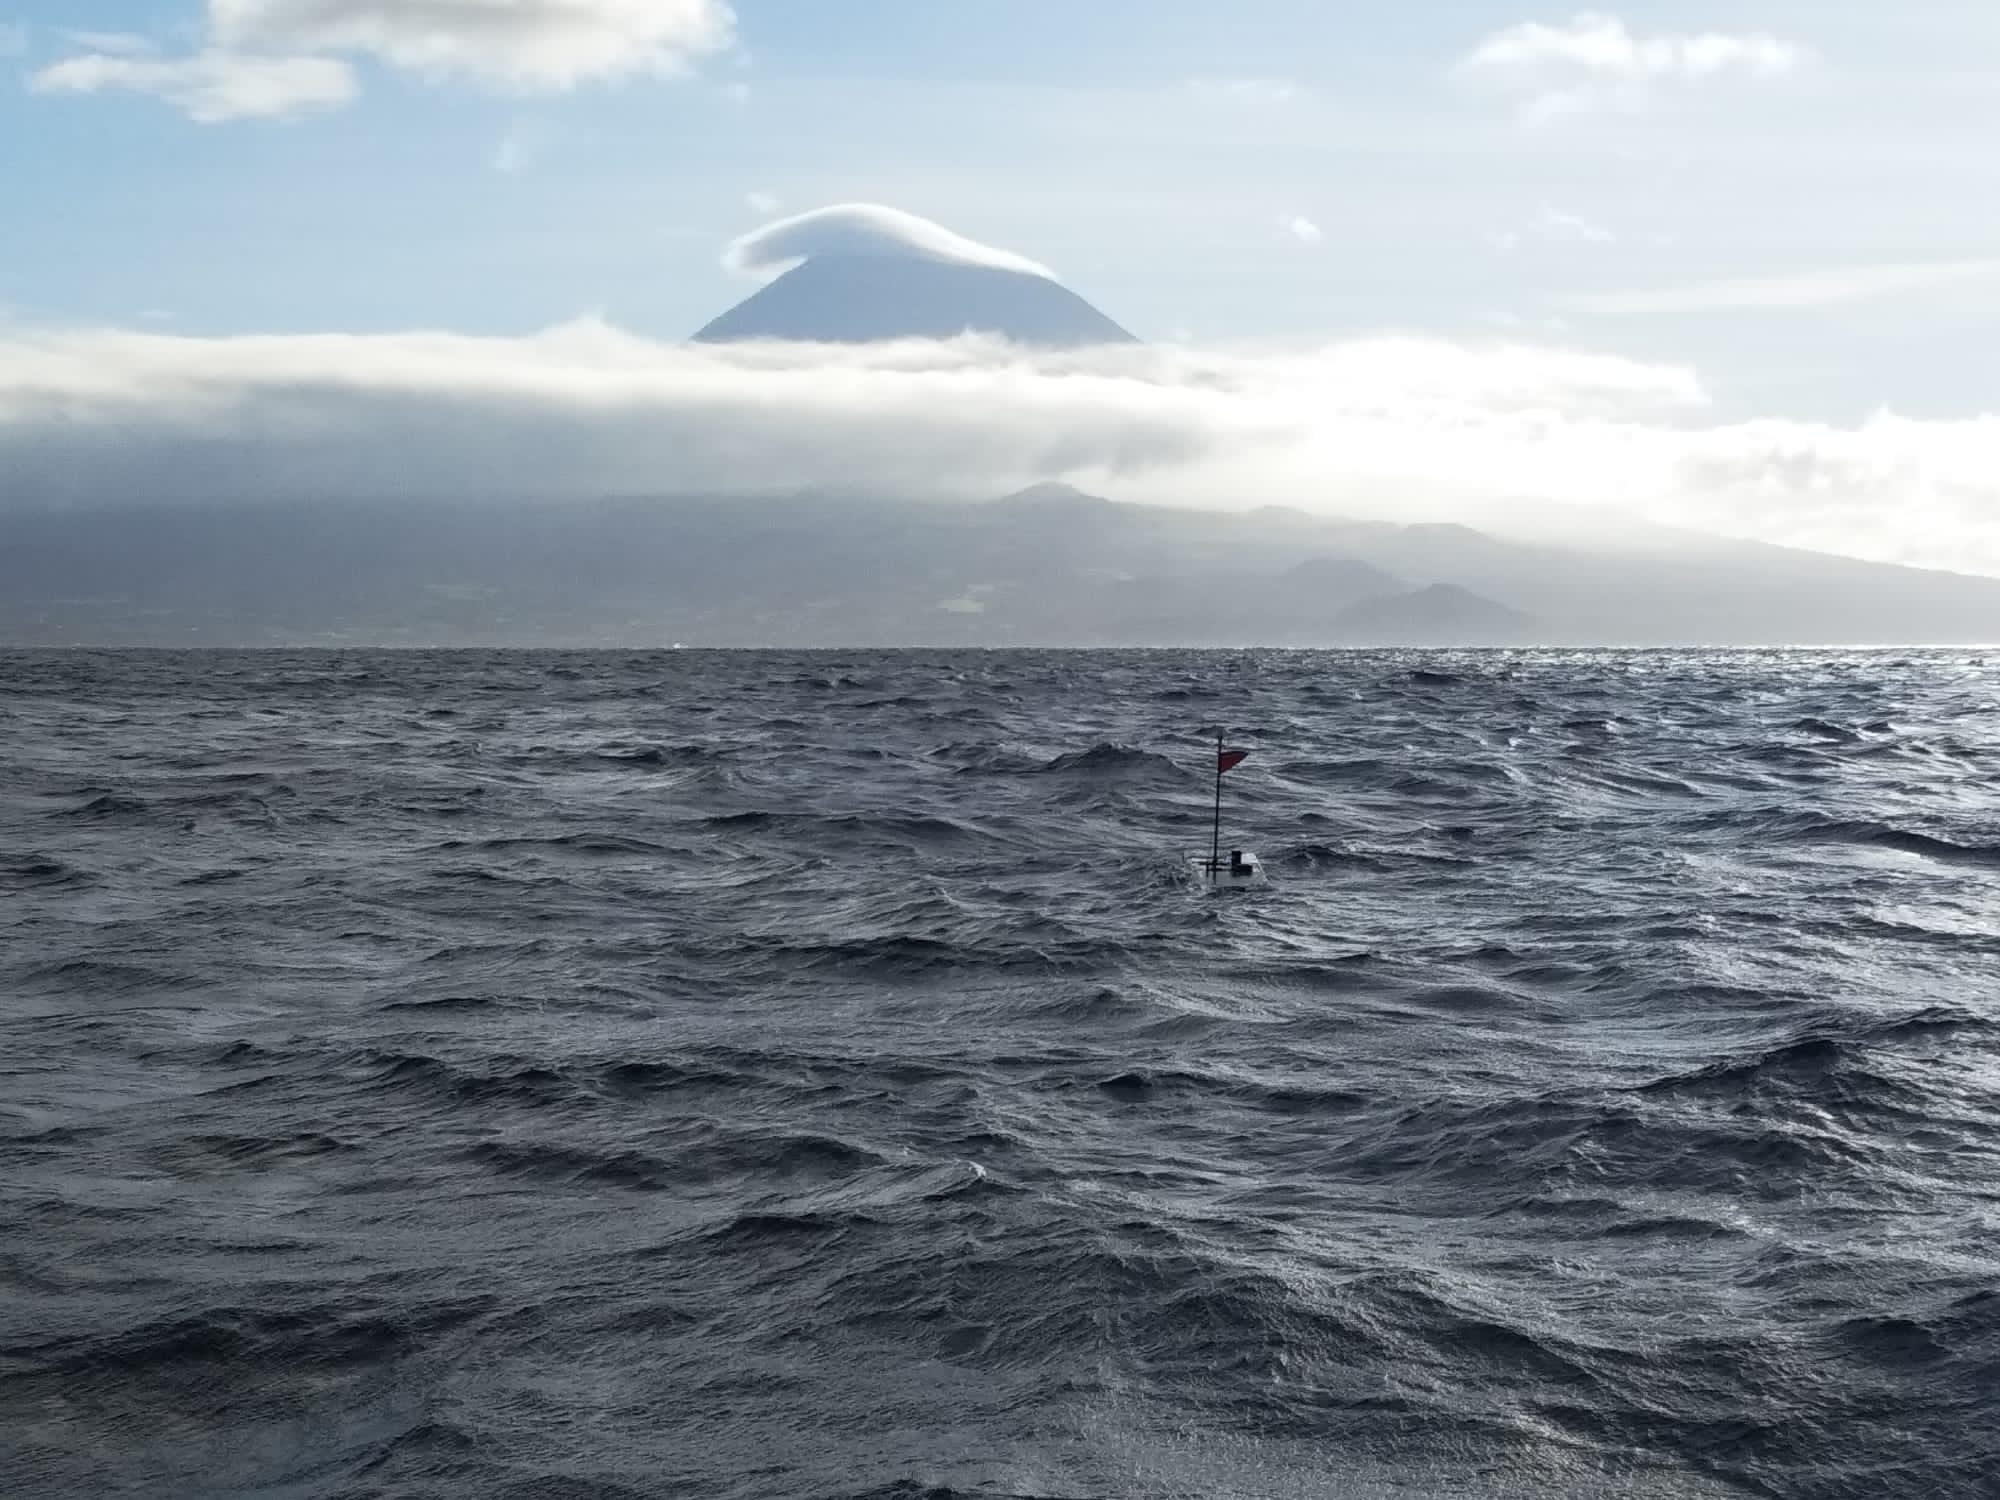 waveglider launch from Horta (Faial,Azores), November 13, 2019